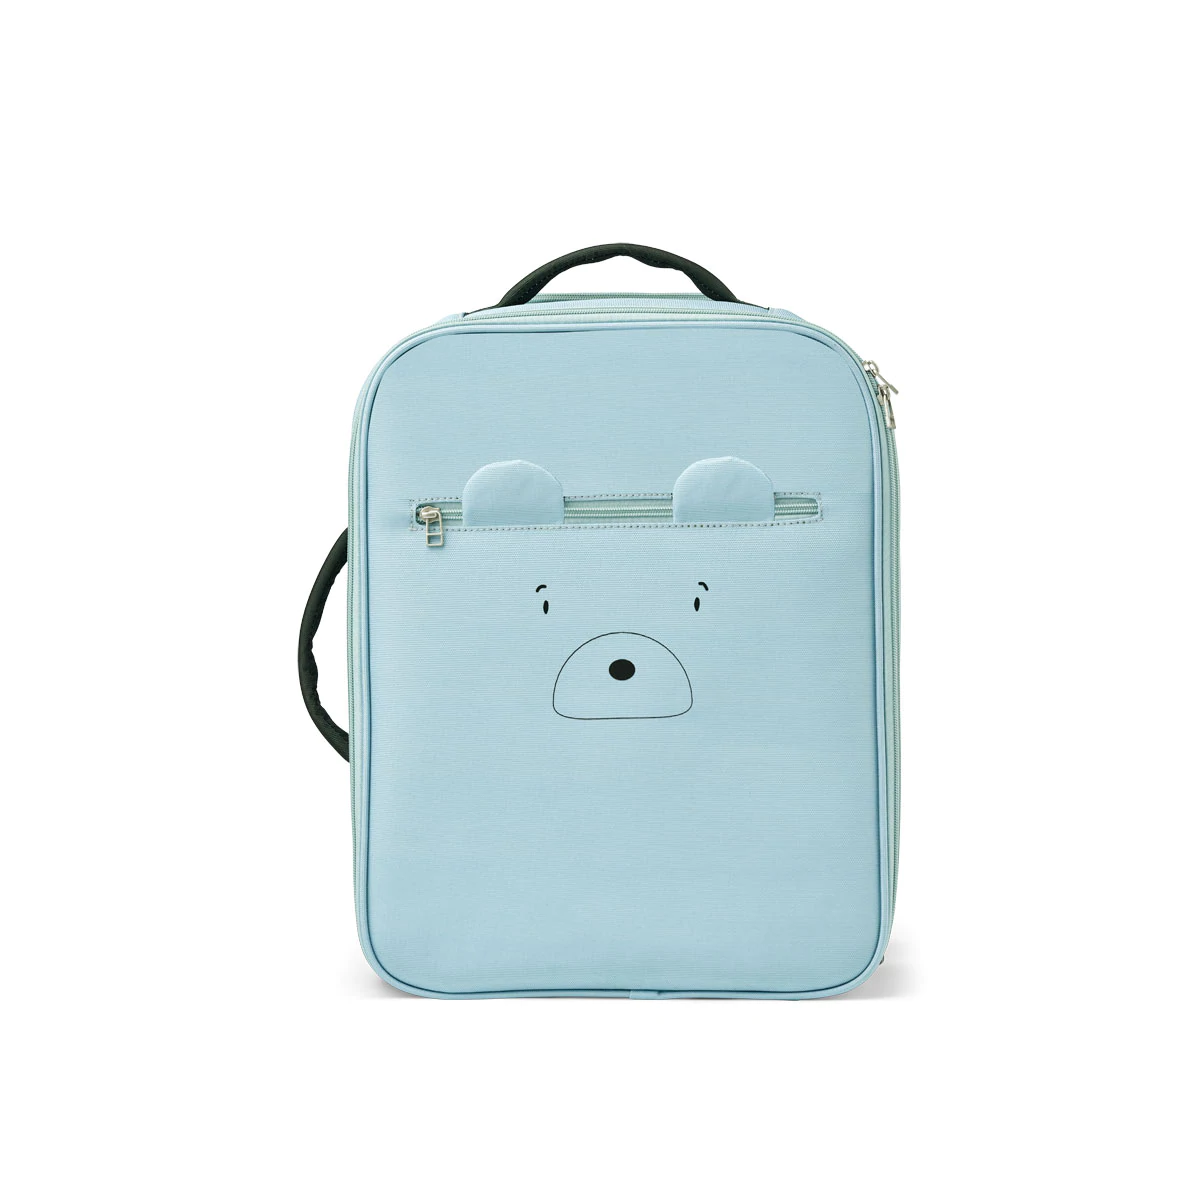 Jeremy Suitcase Bag LW14887